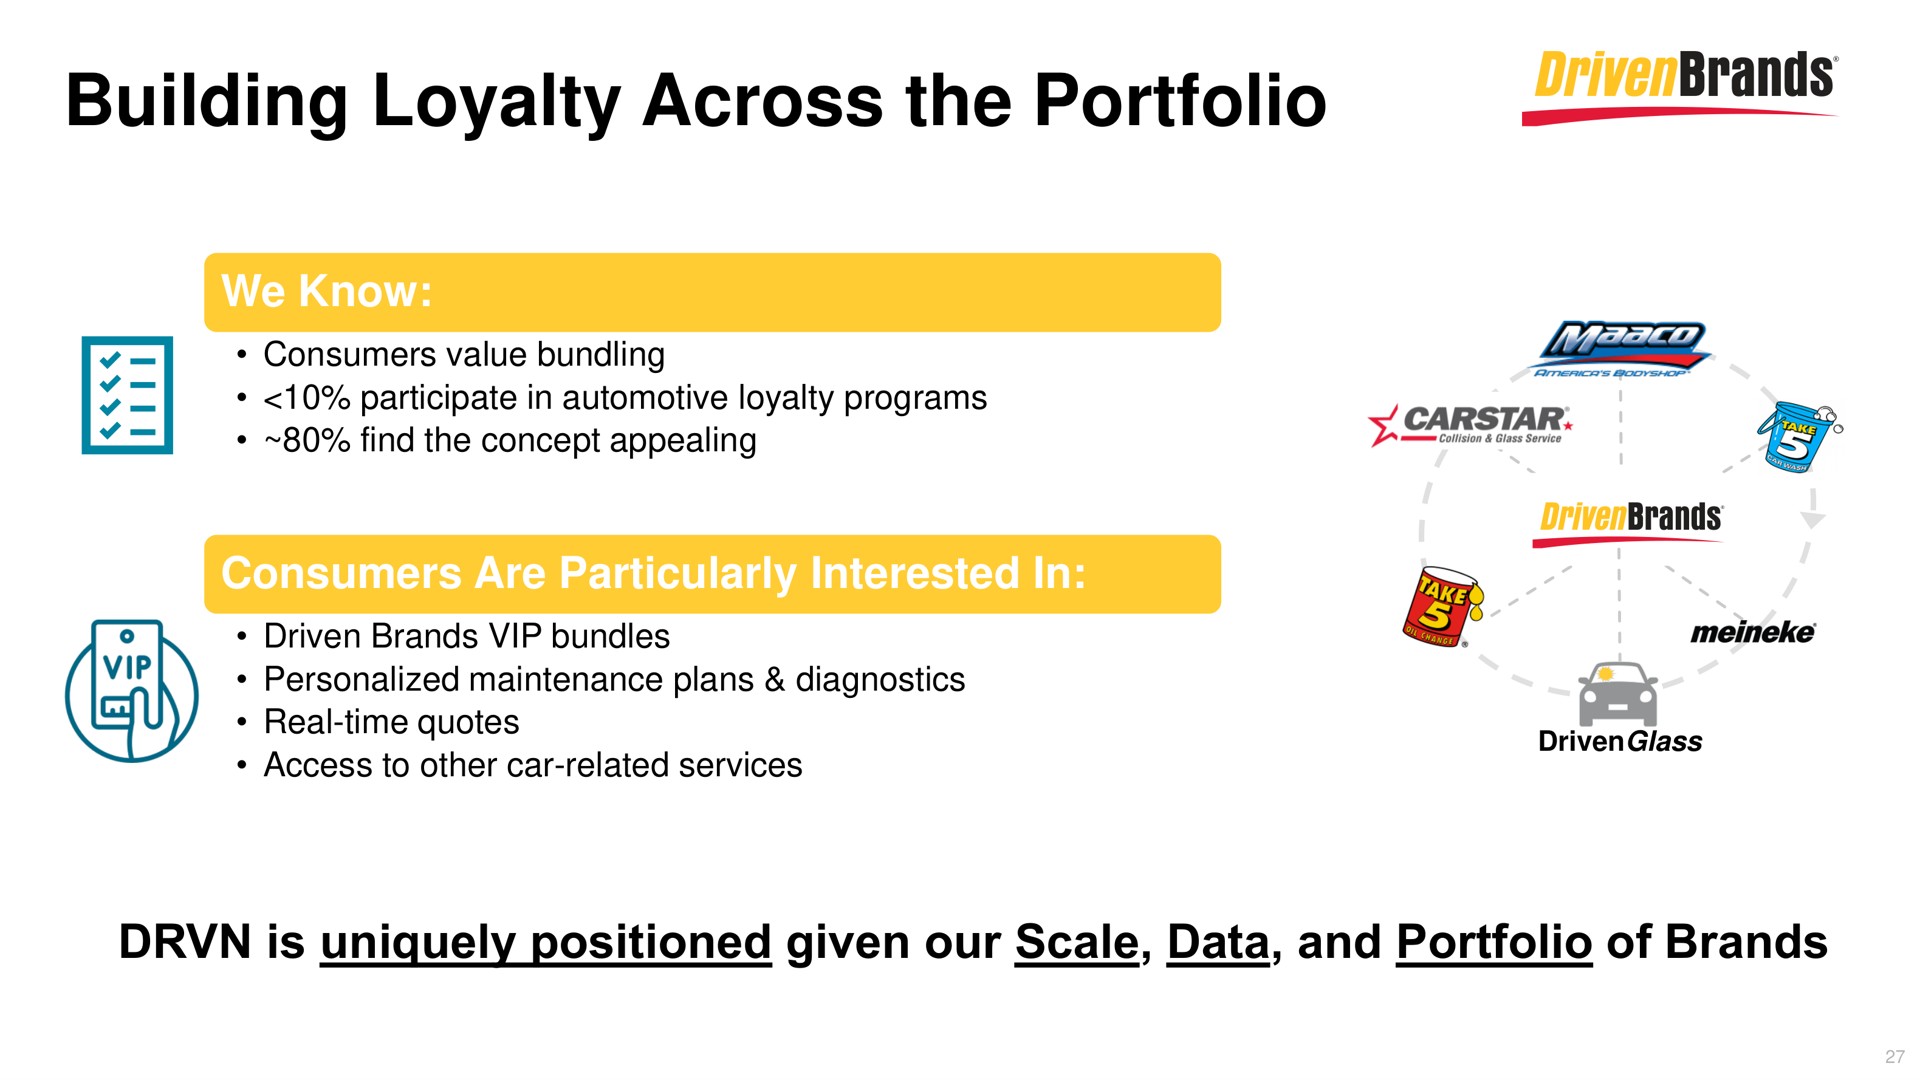 building loyalty across the portfolio | DrivenBrands